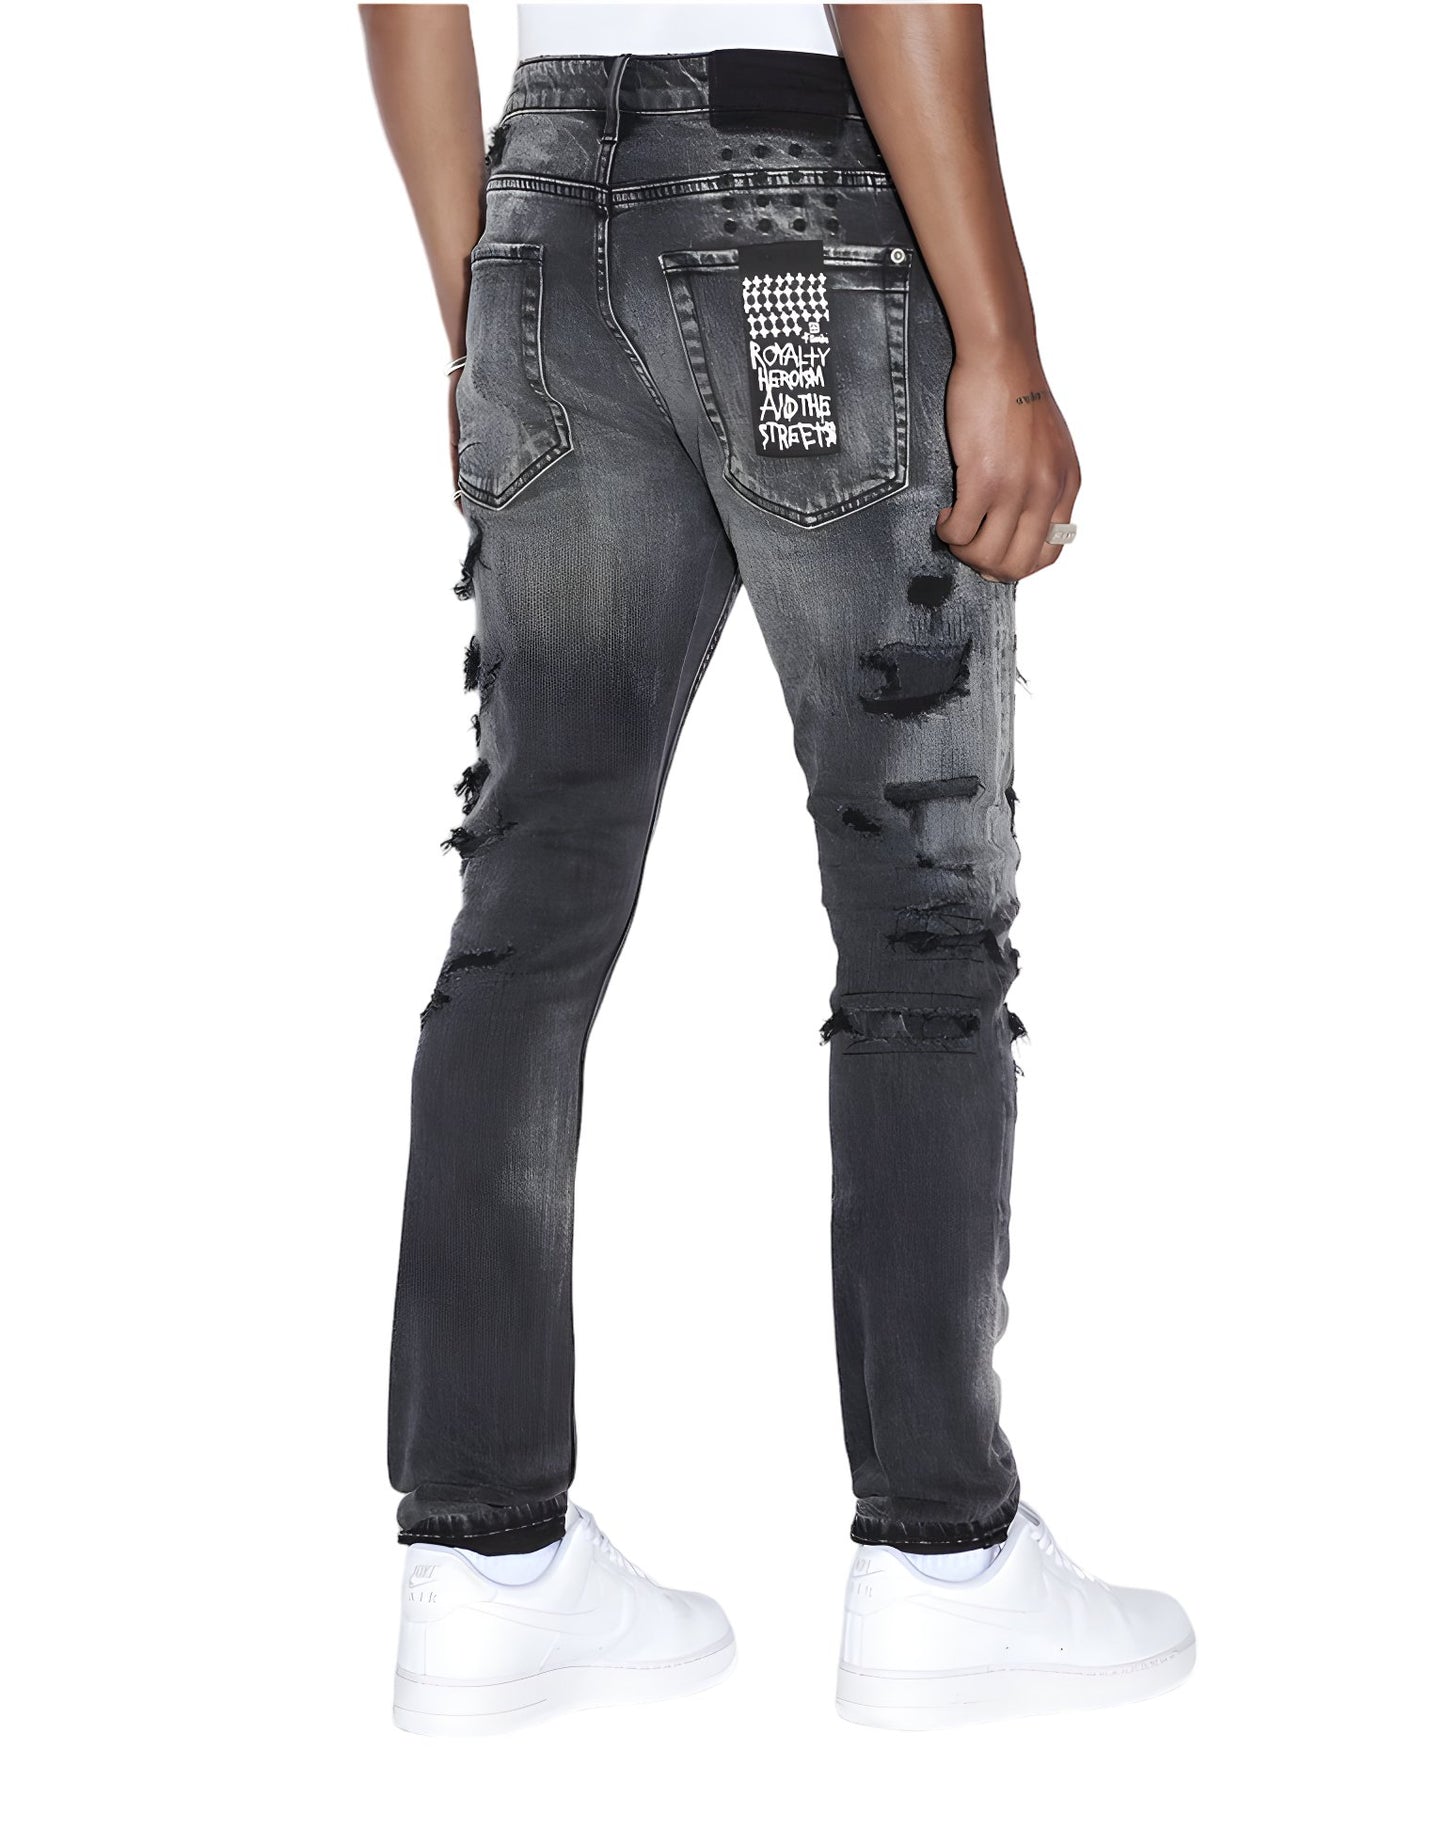 The back view of a man wearing ripped Ksubi Van Winkle Tektonik Black jeans.